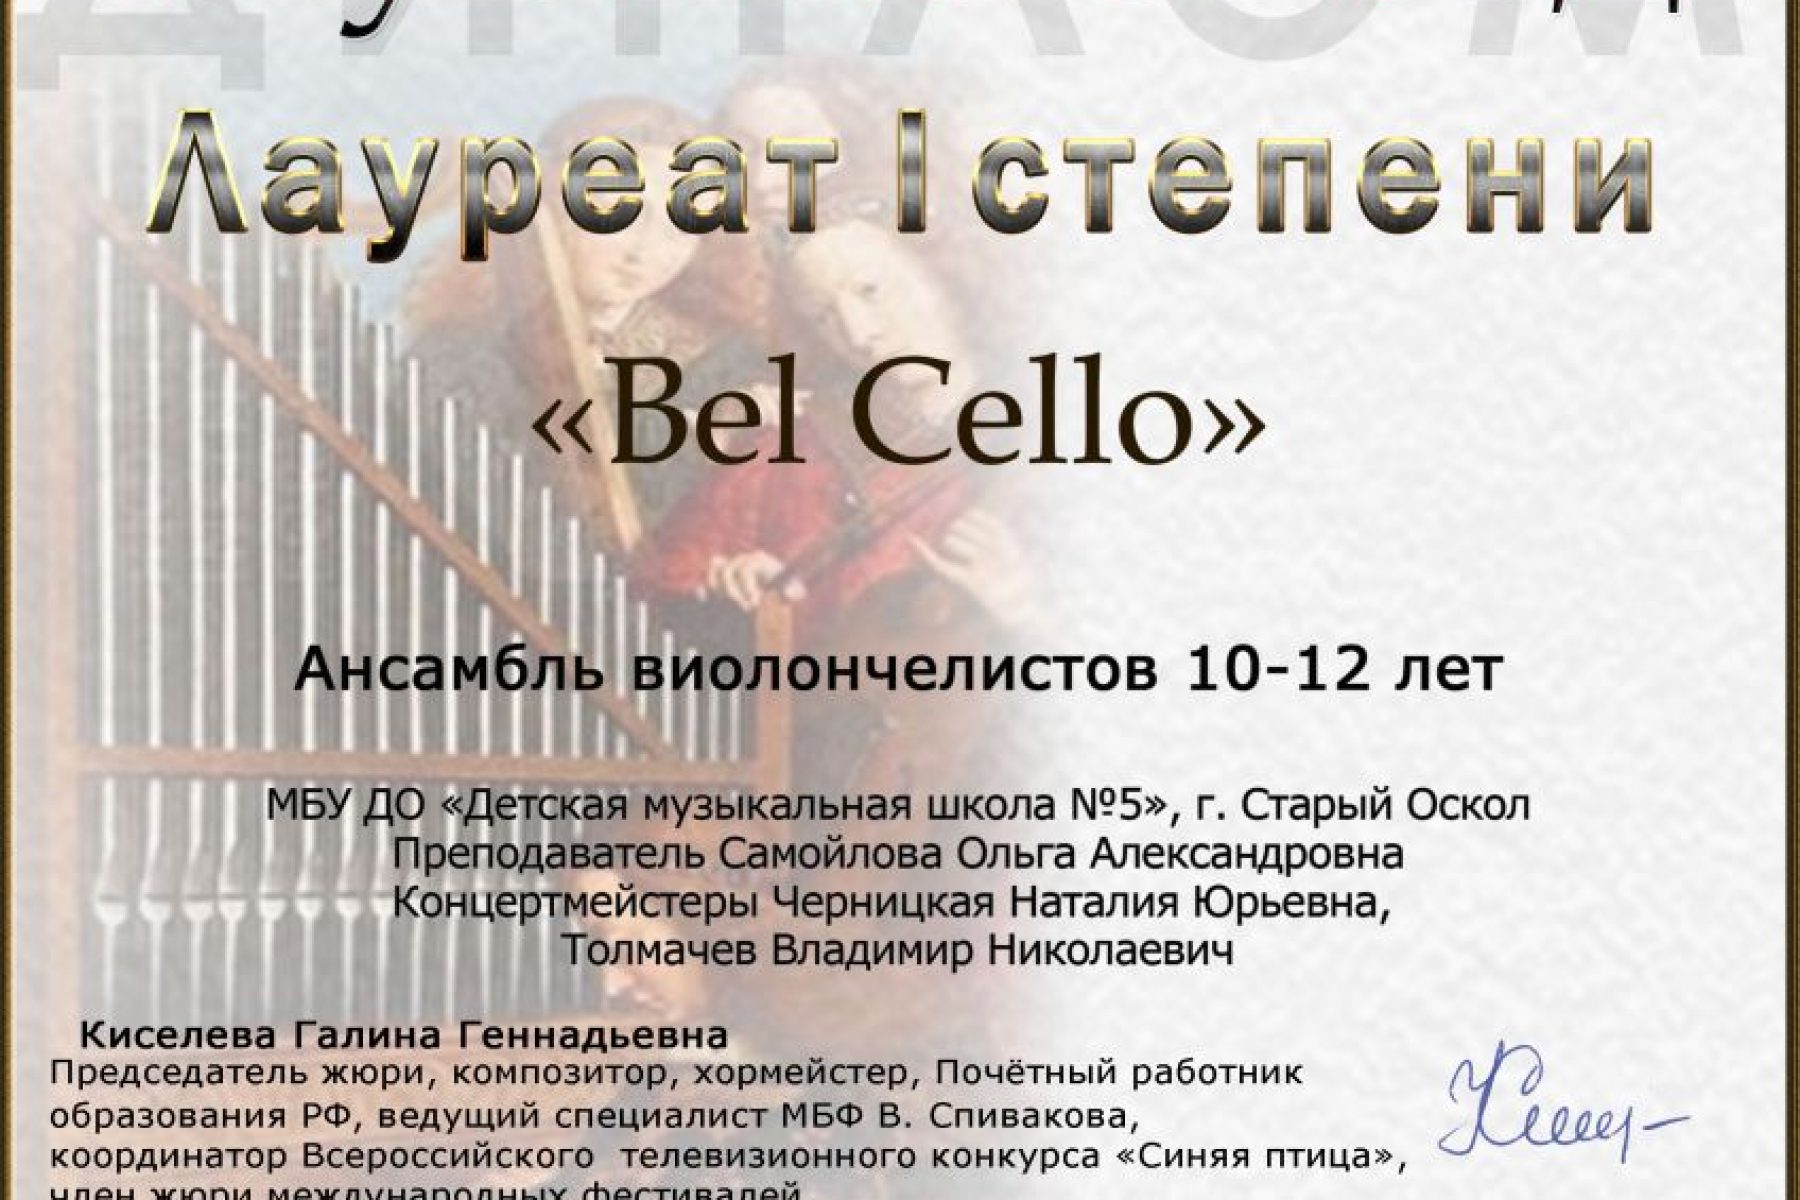 «Bel Cello»